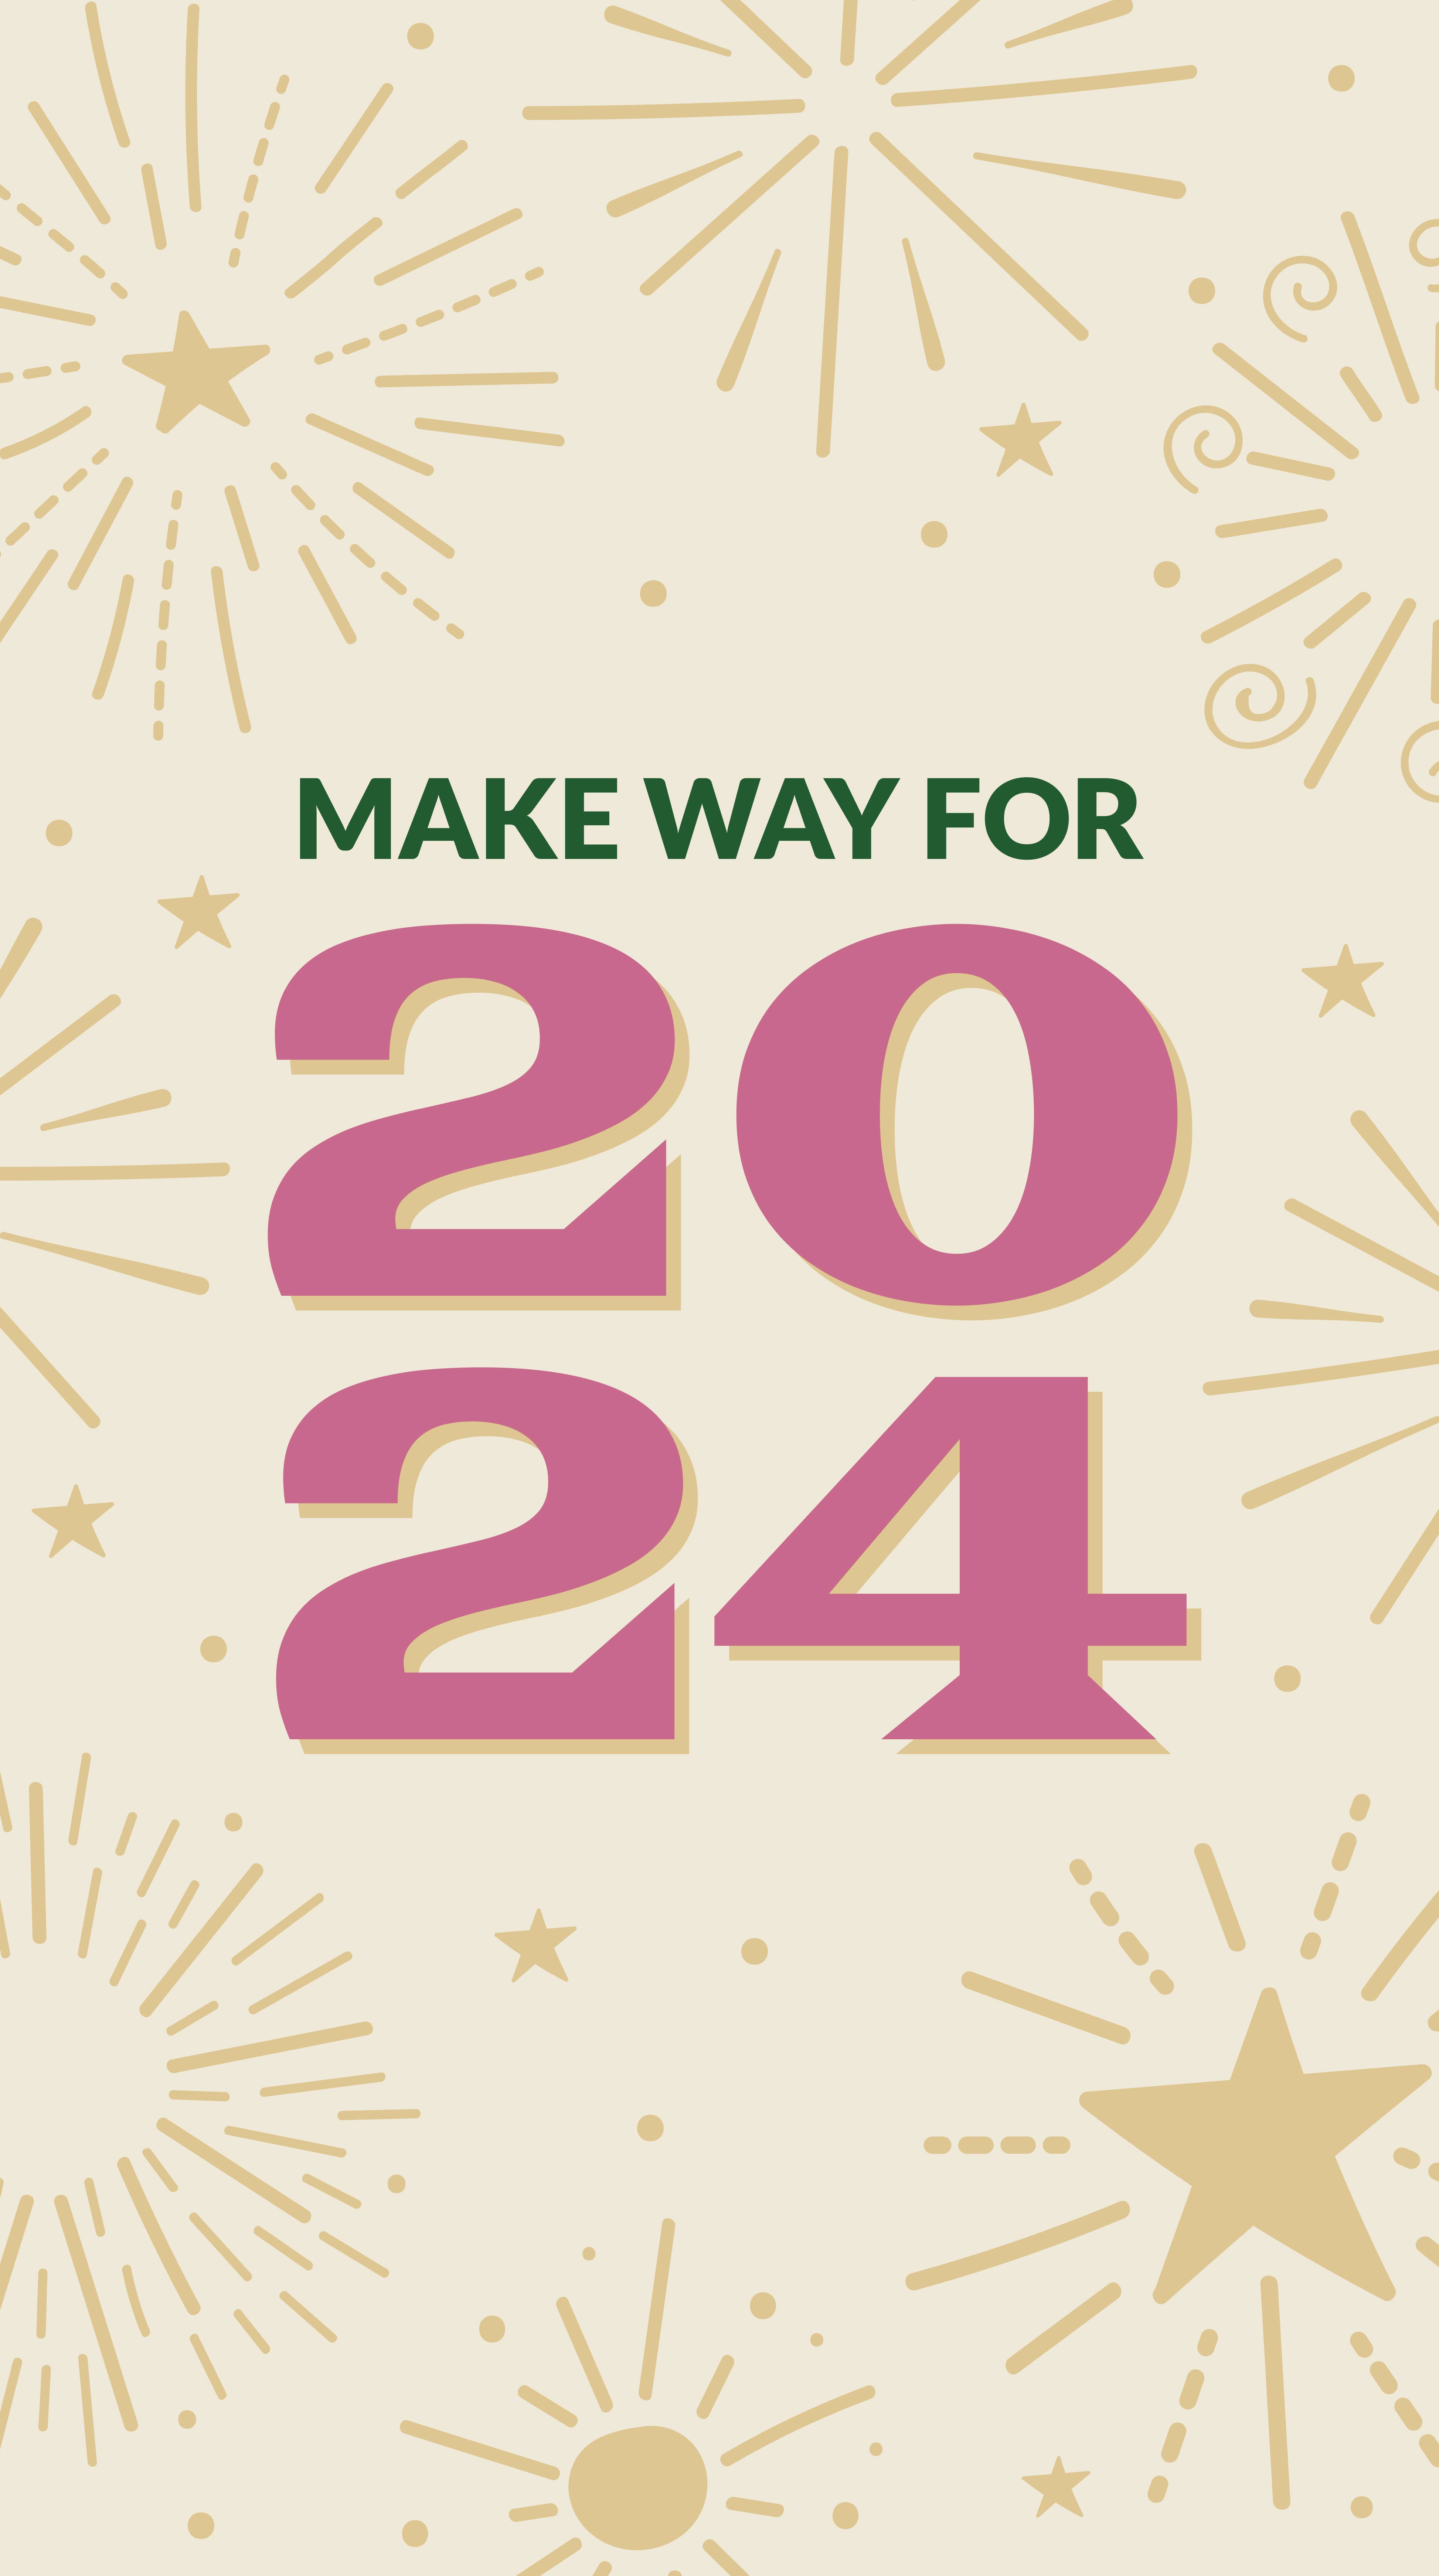 Make Way For 2024 ?quality=70&auto=webp&optimize={medium}